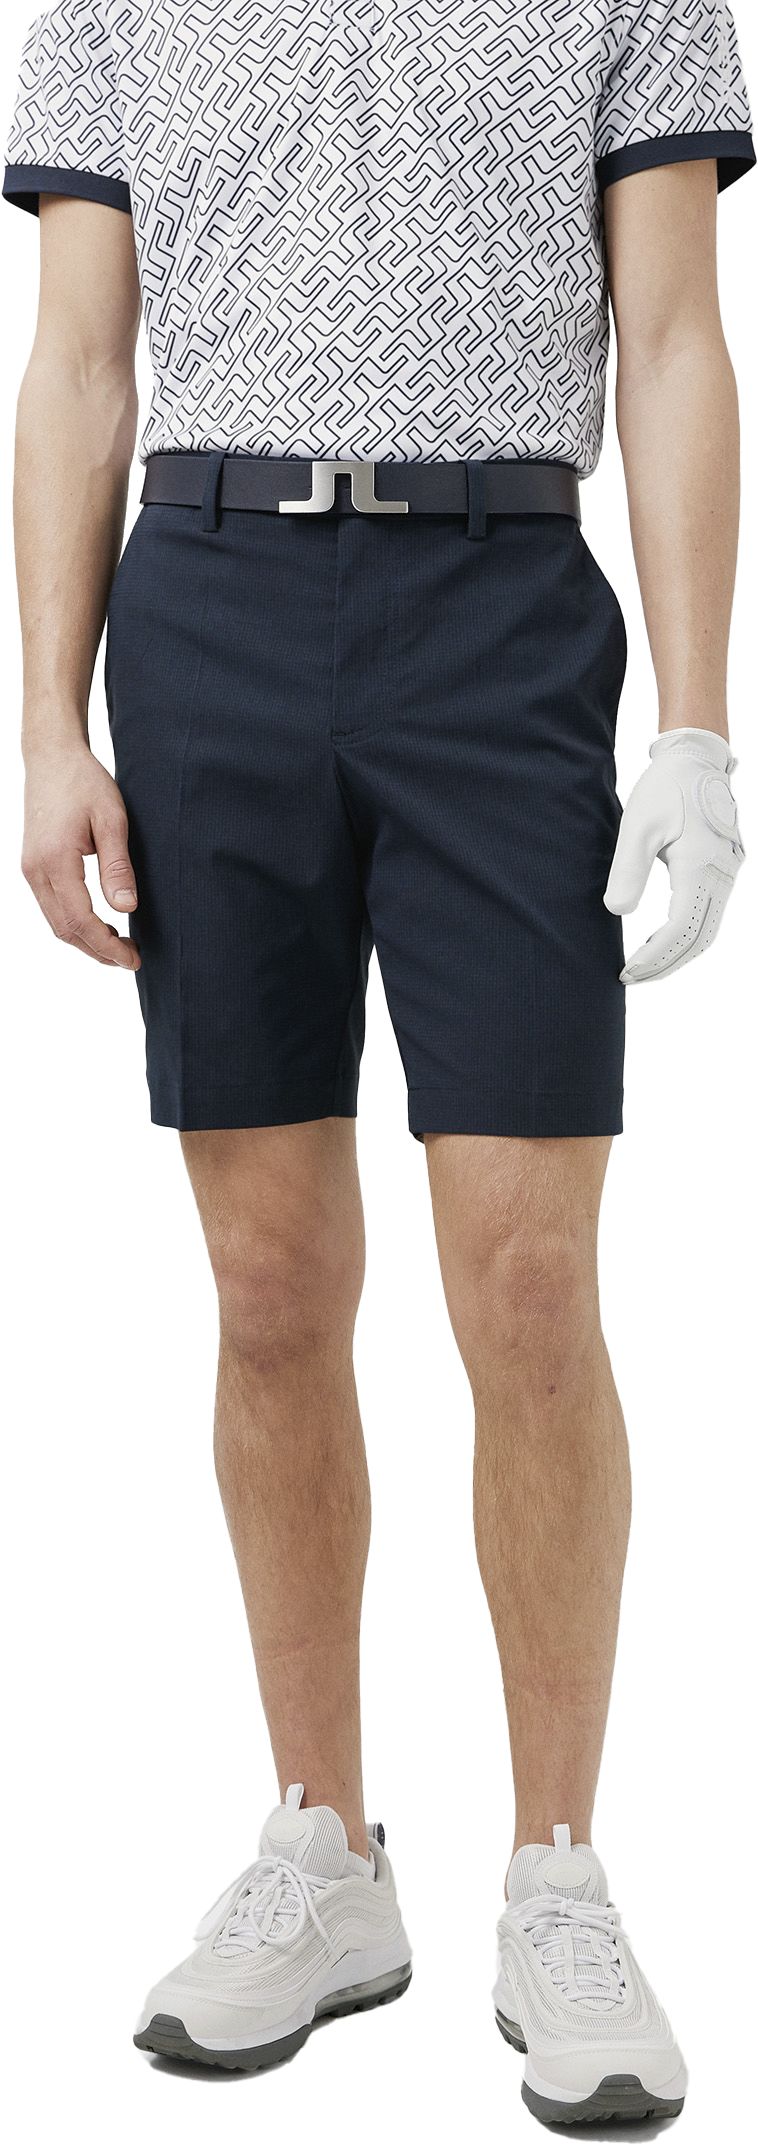 J LINDEBERG, M Vent Tight Golf Shorts